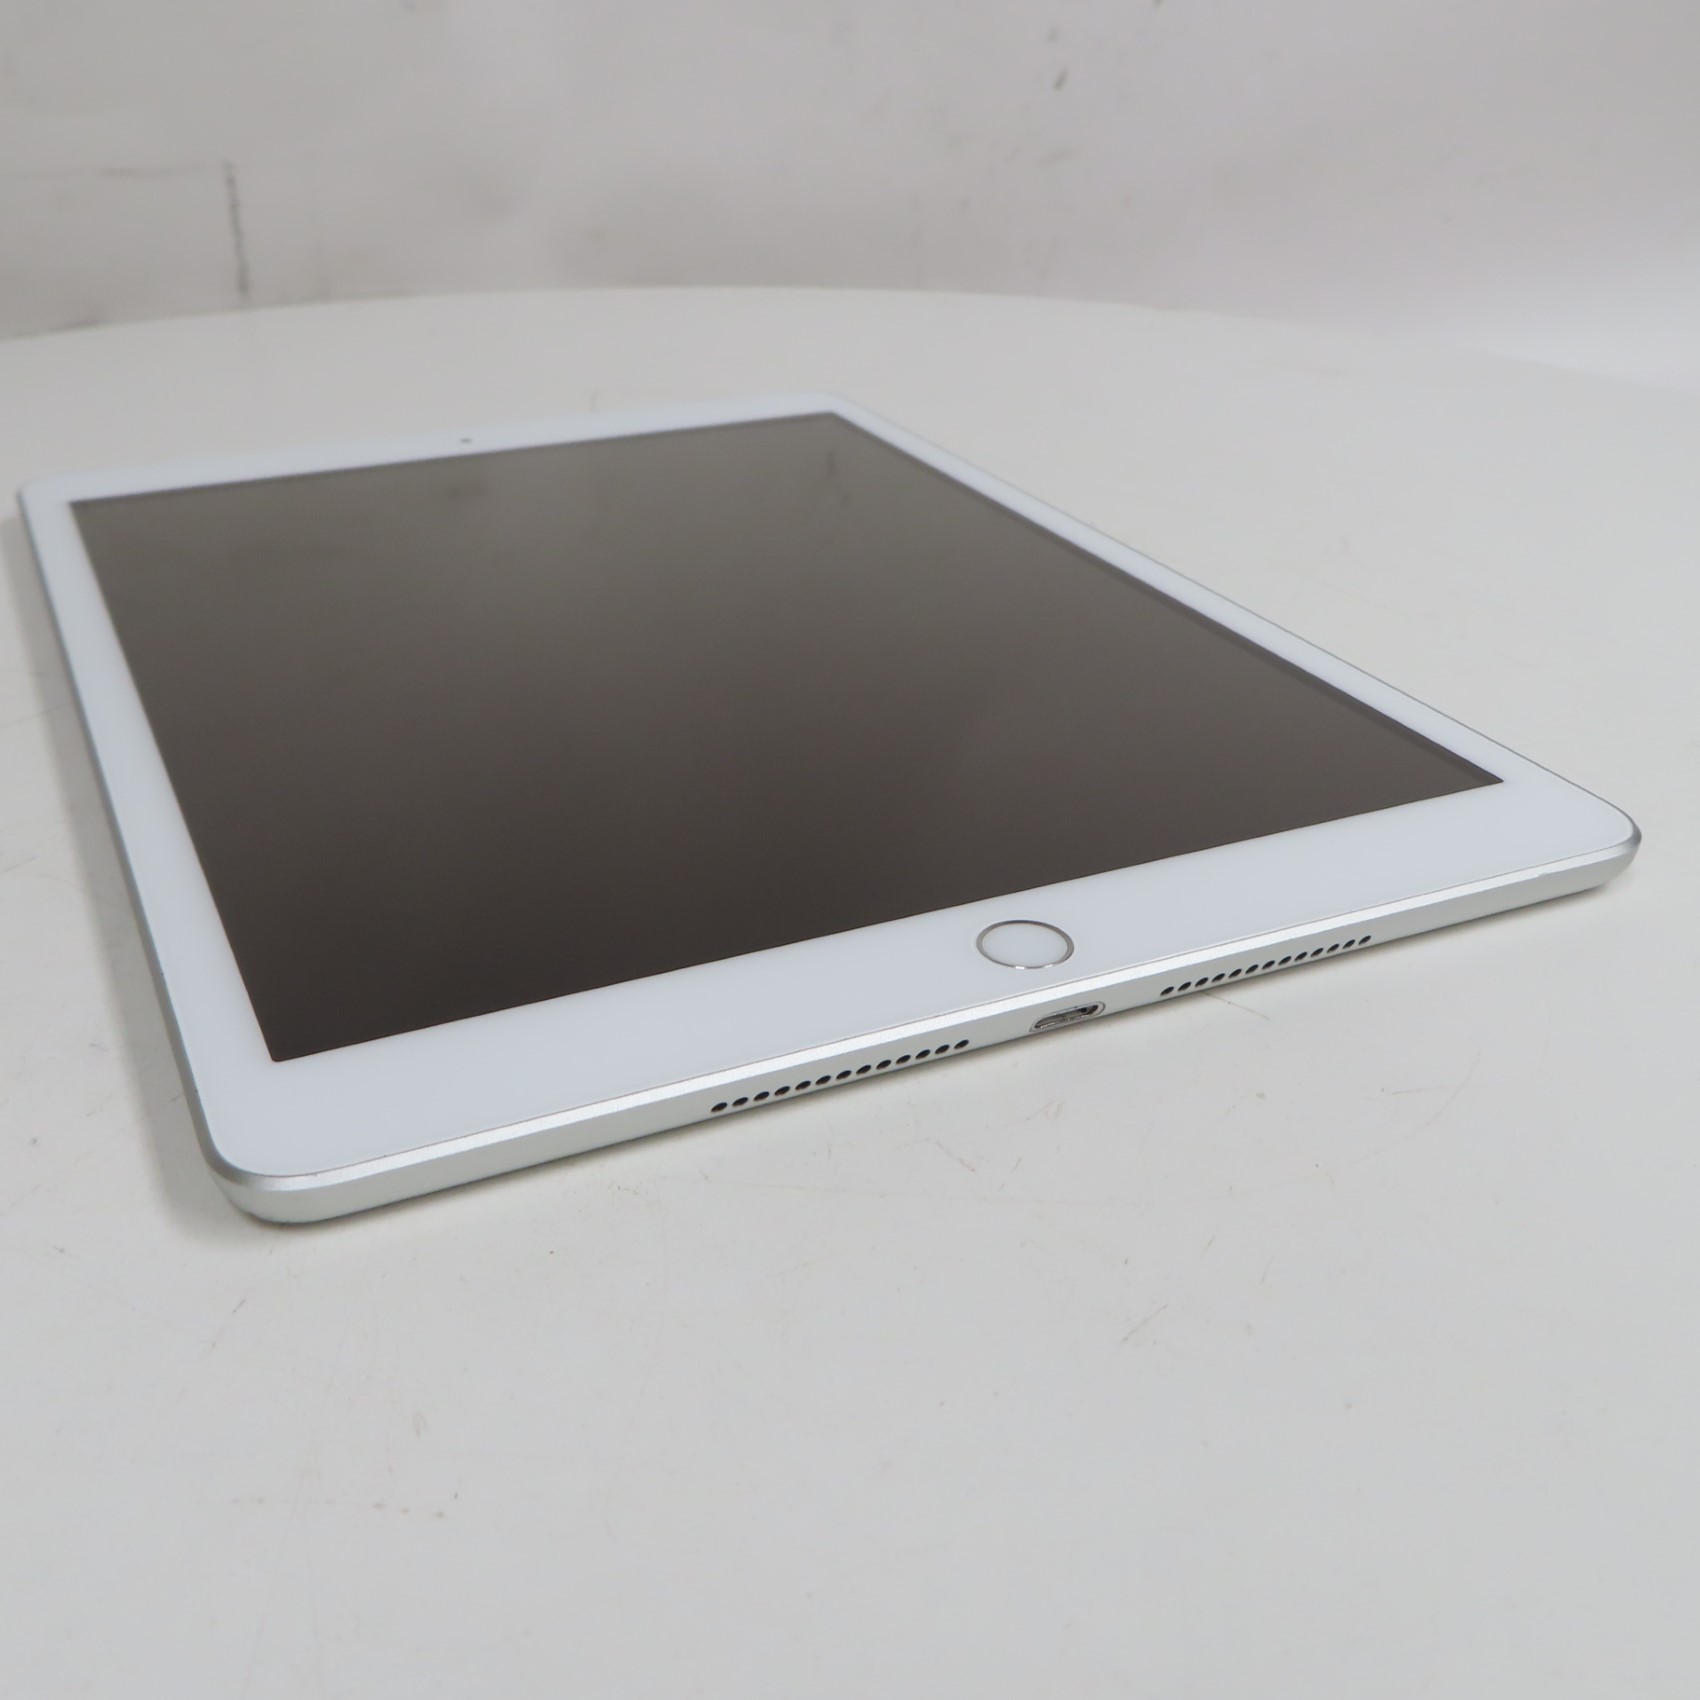 Apple iPad 7th Gen. 32GB, Wi-Fi, 10.2 in - Space Gray for sale